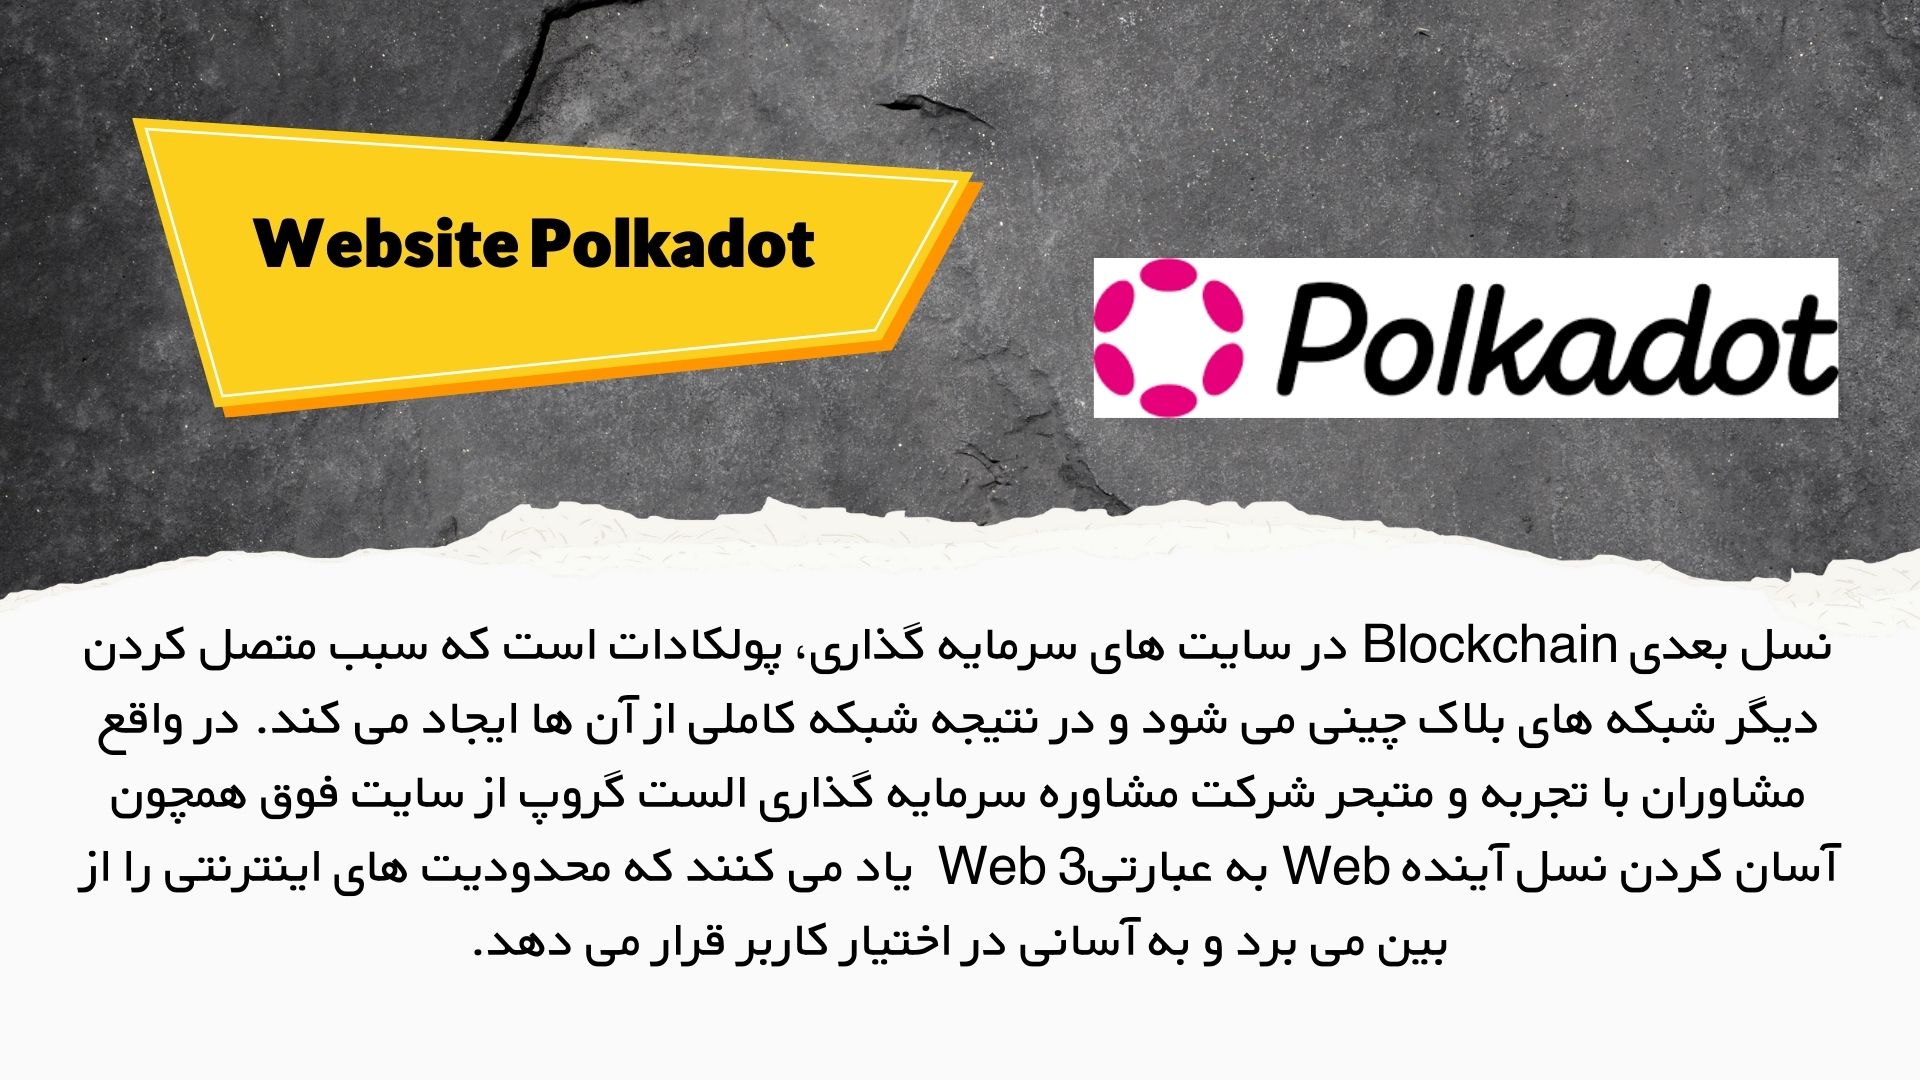 Website Polkadot